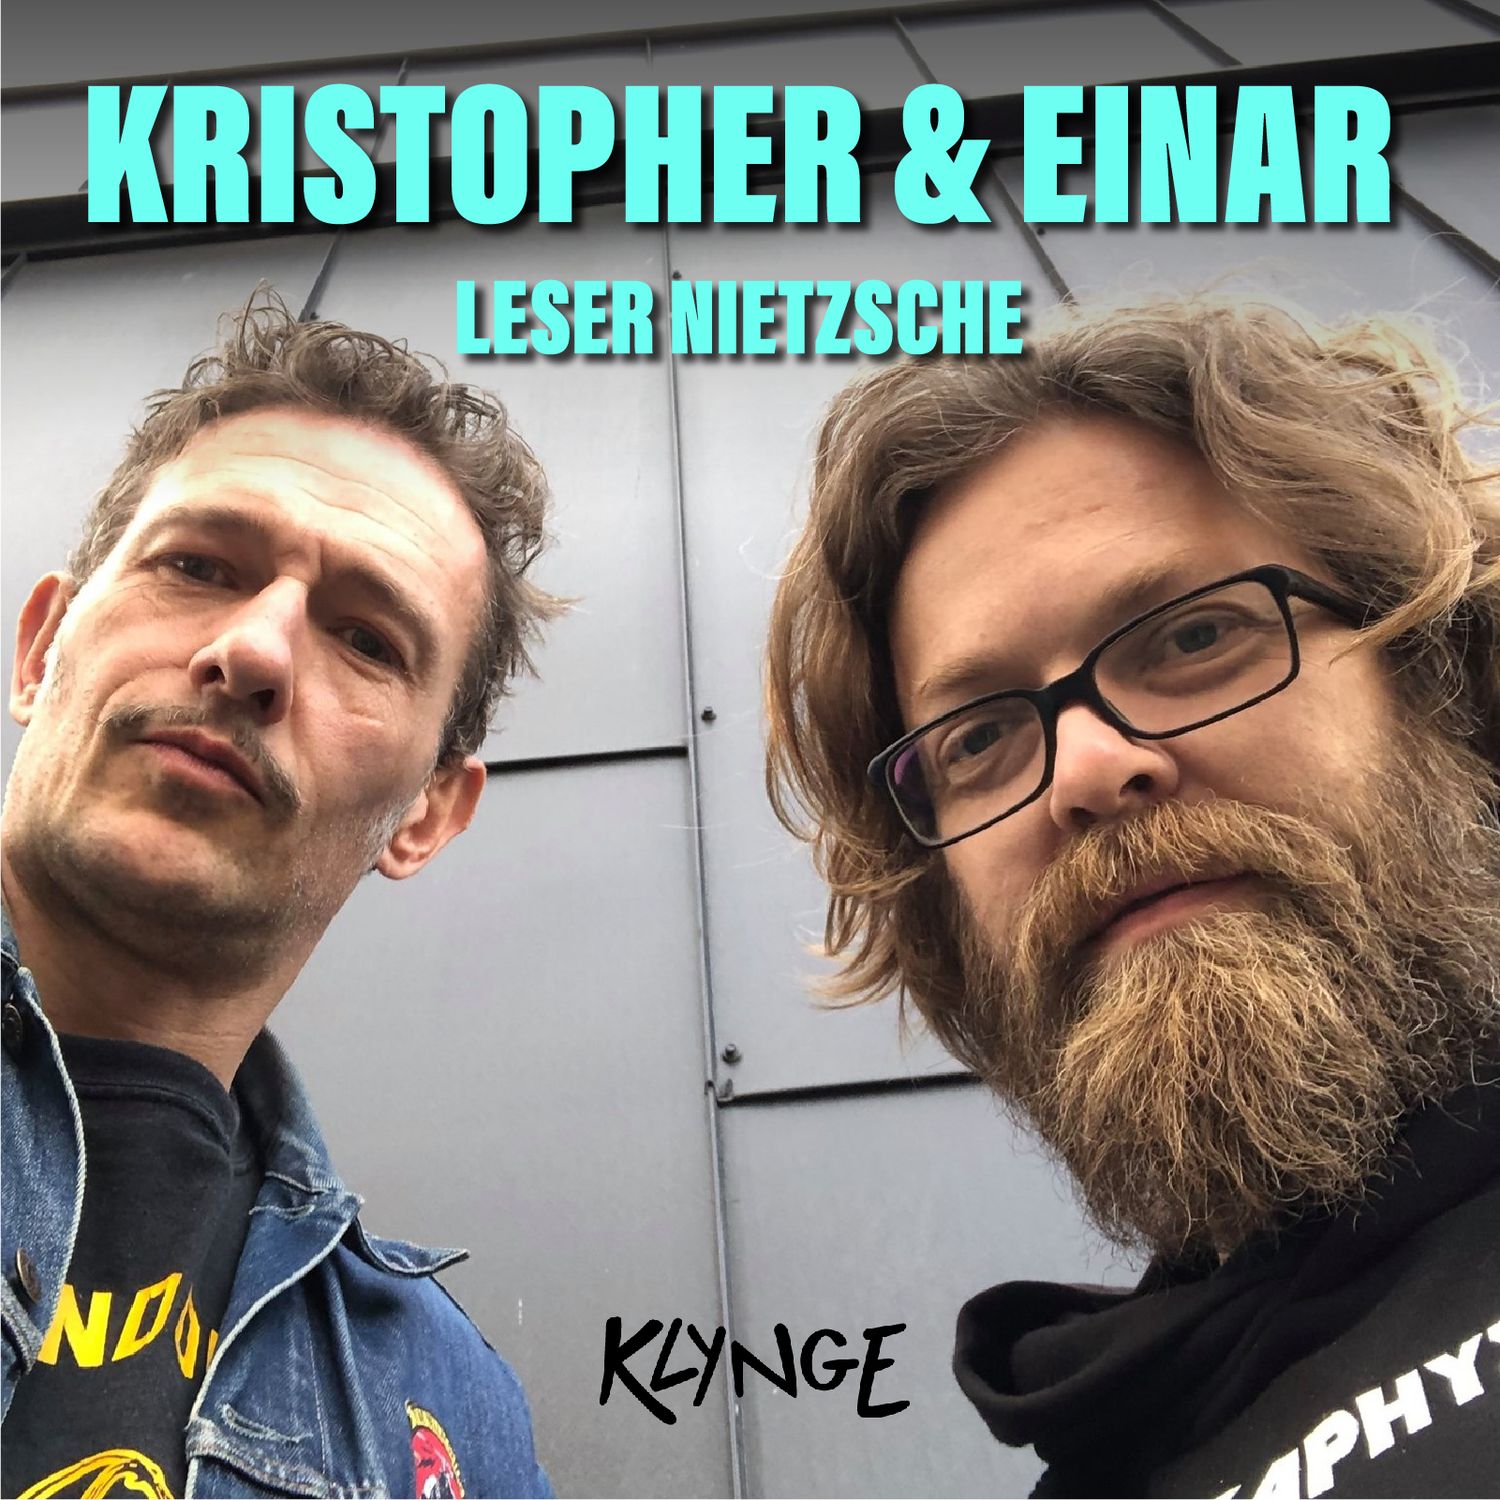 Kristopher og Einar leser Nietzsche